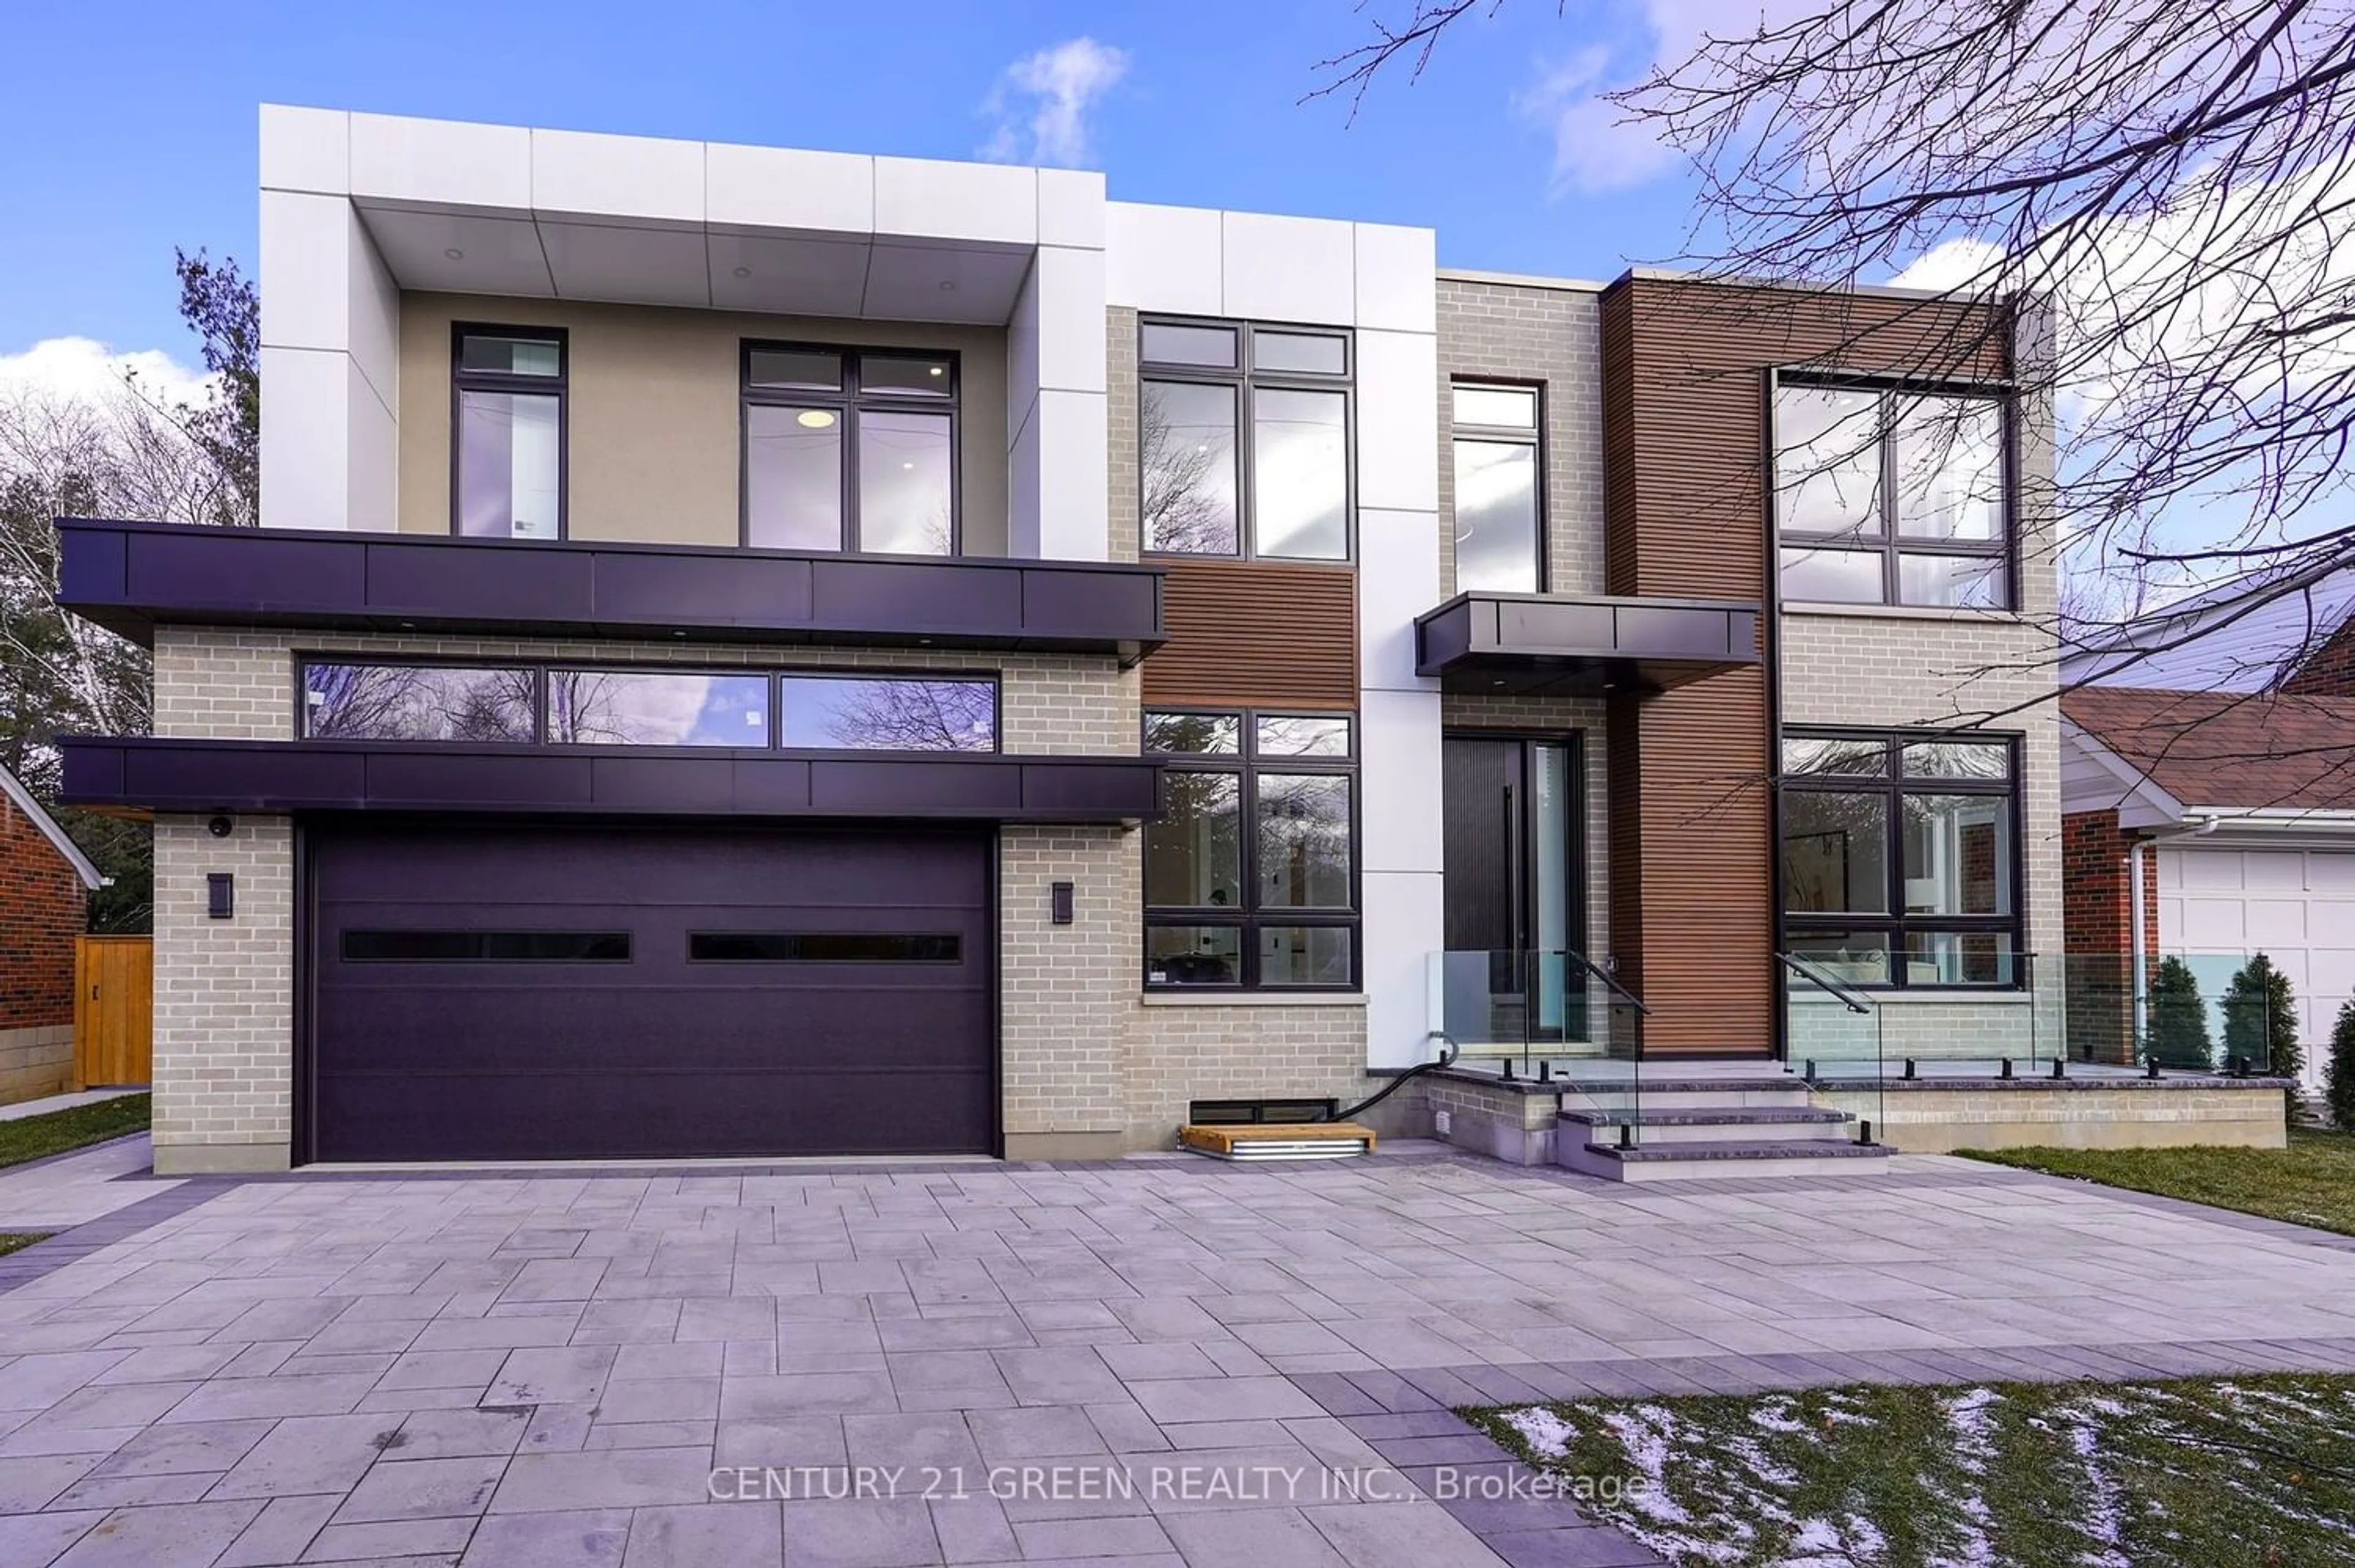 Home with brick exterior material for 49 Grantbrook St, Toronto Ontario M2R 2E8